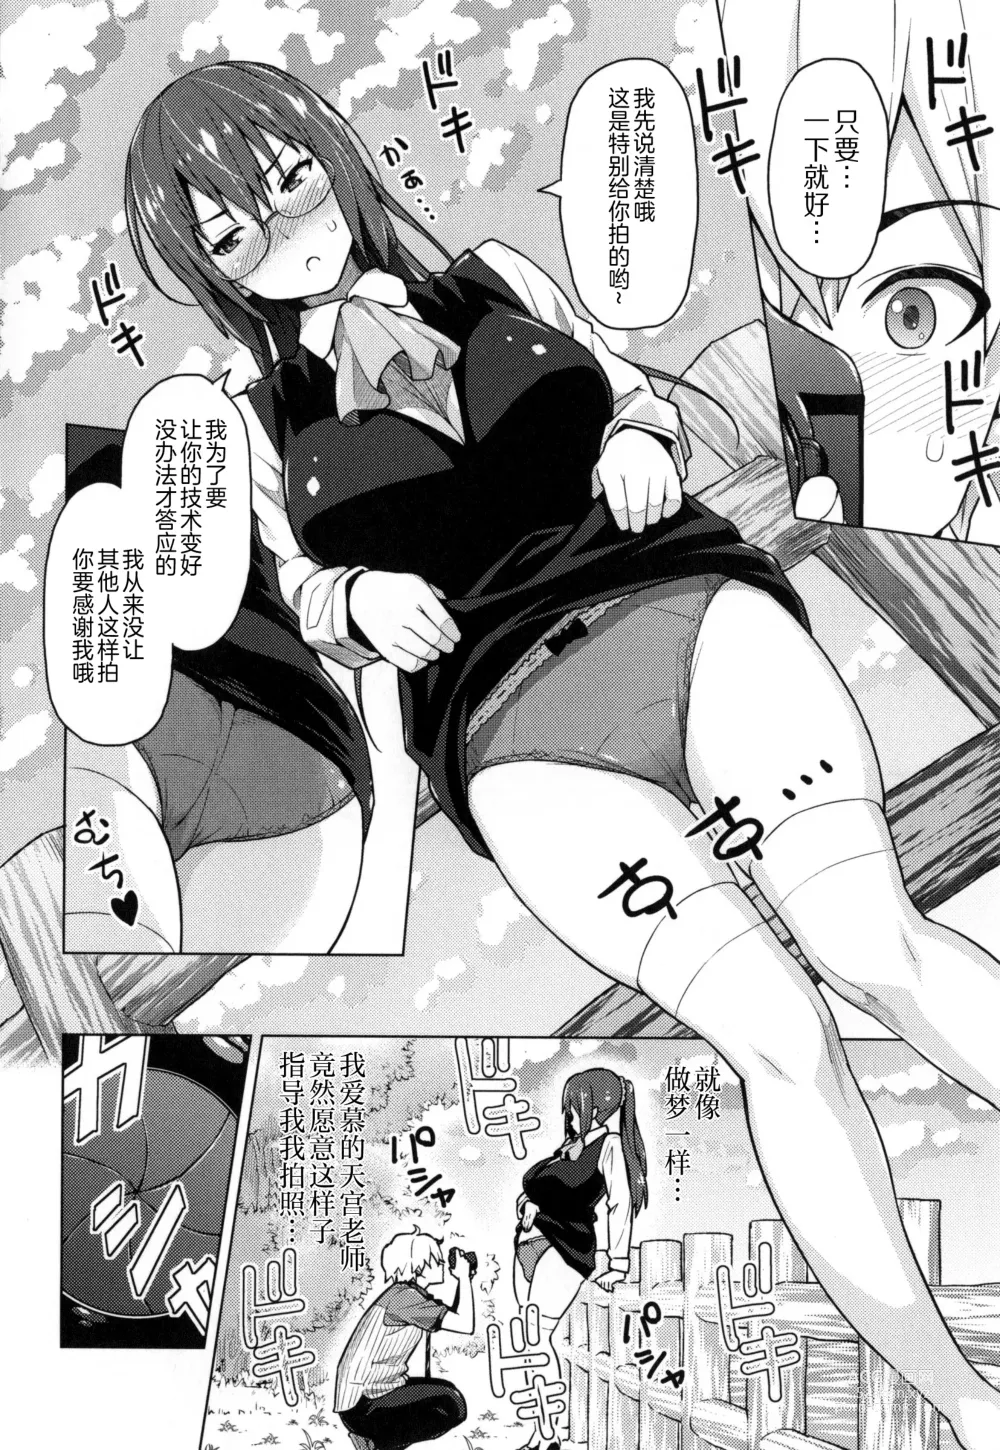 Page 9 of manga Photorare SEX & photograph